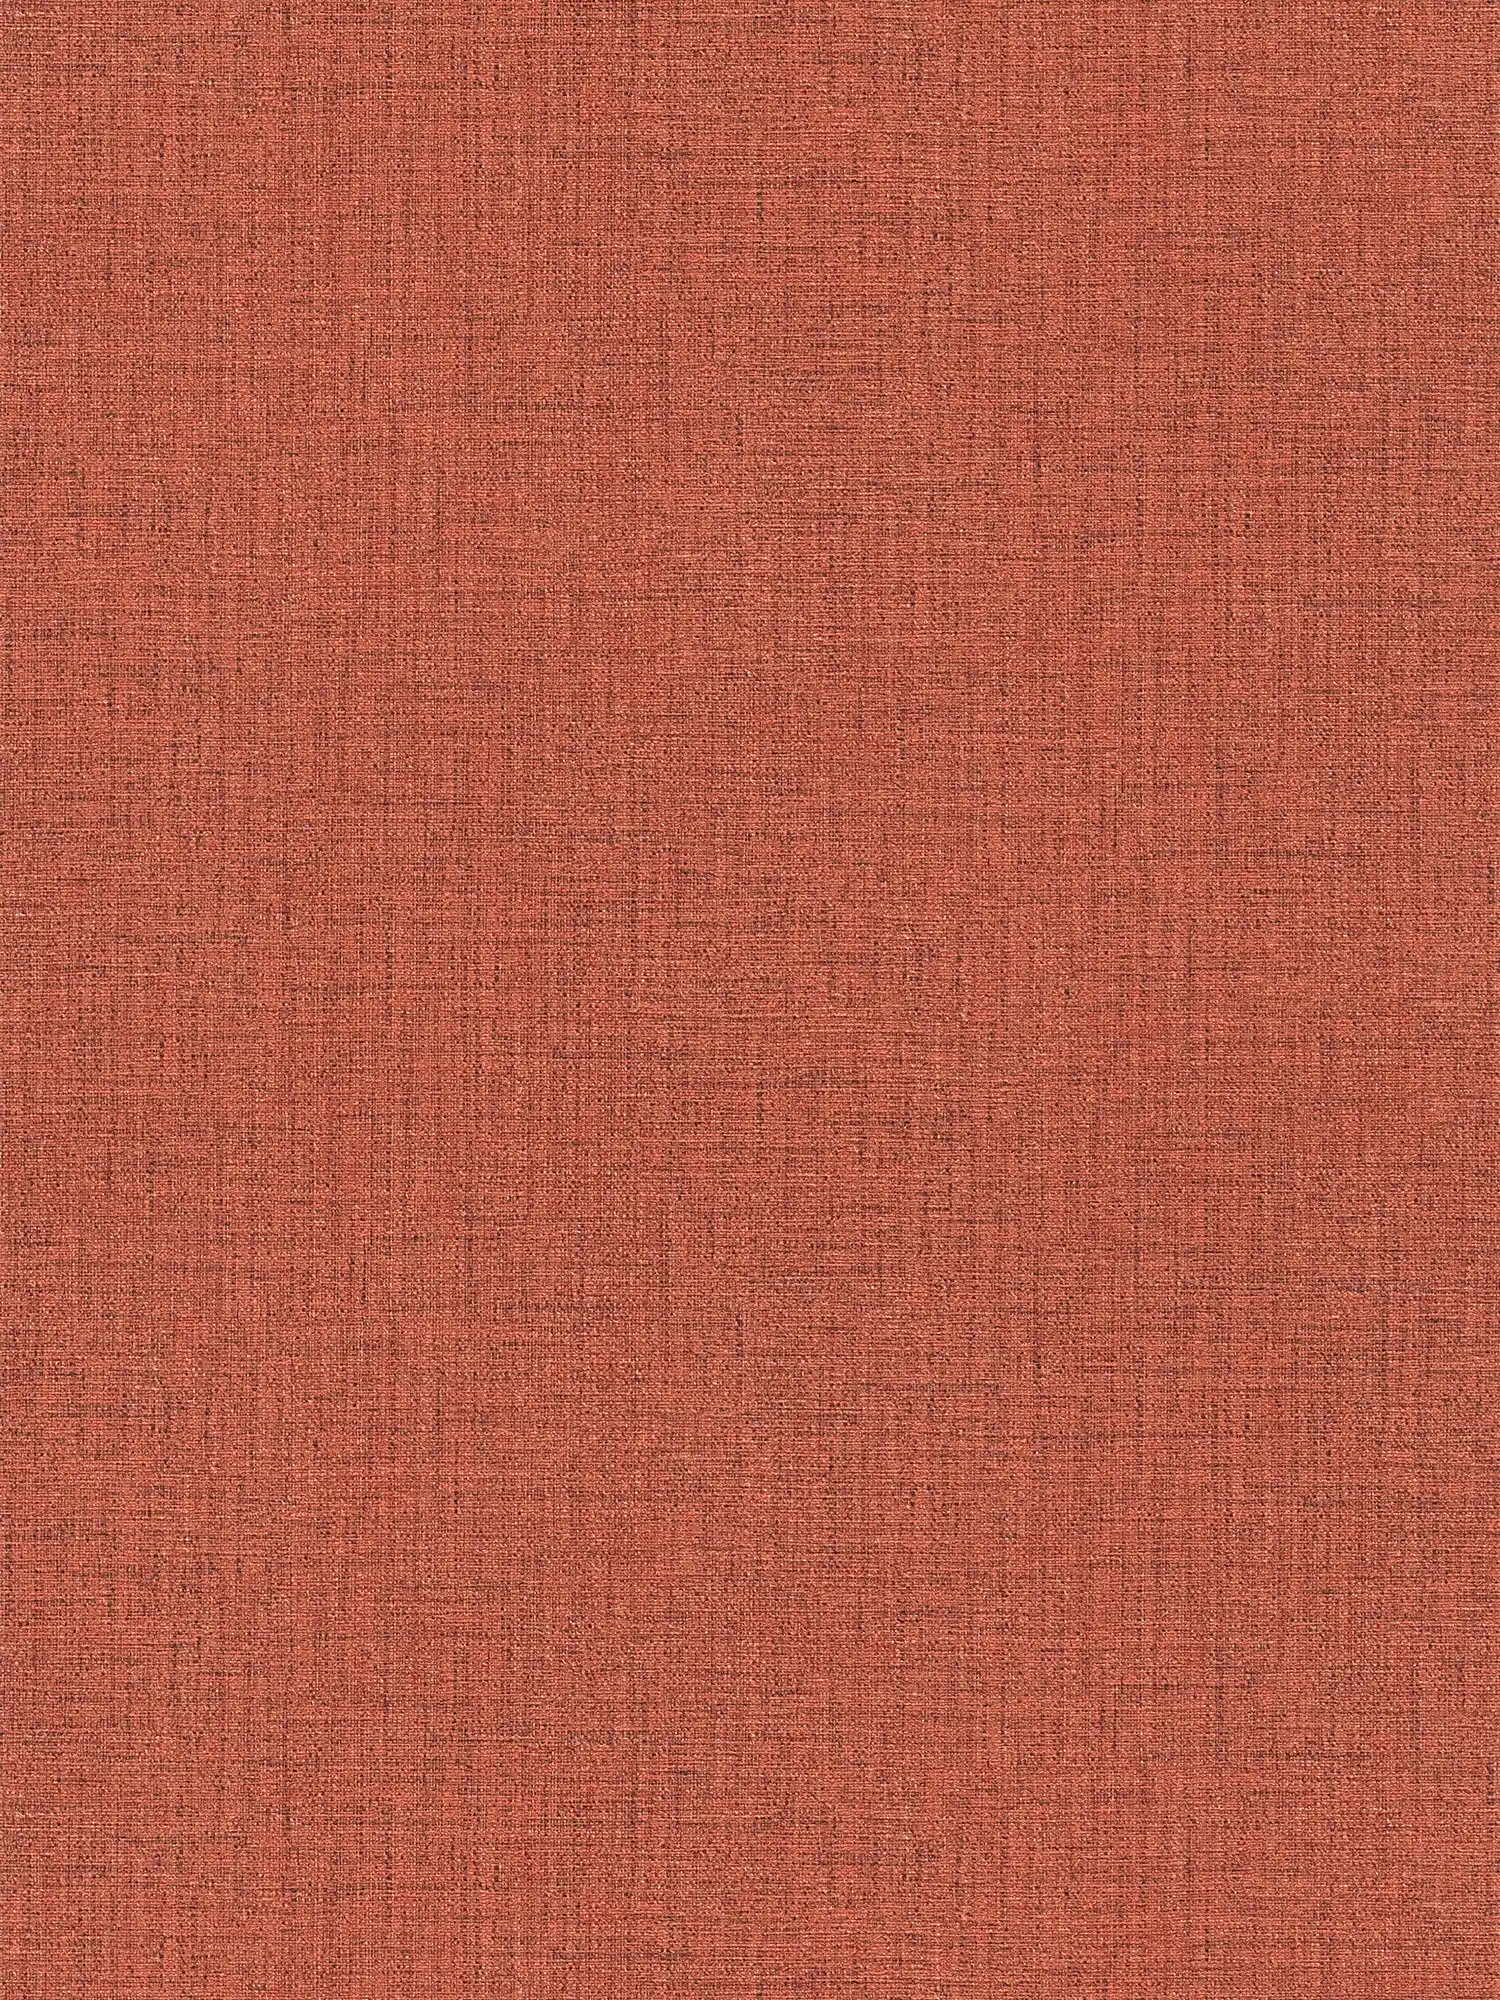 Vliestapete Rot mit Textiloptik & Strukturdesign
